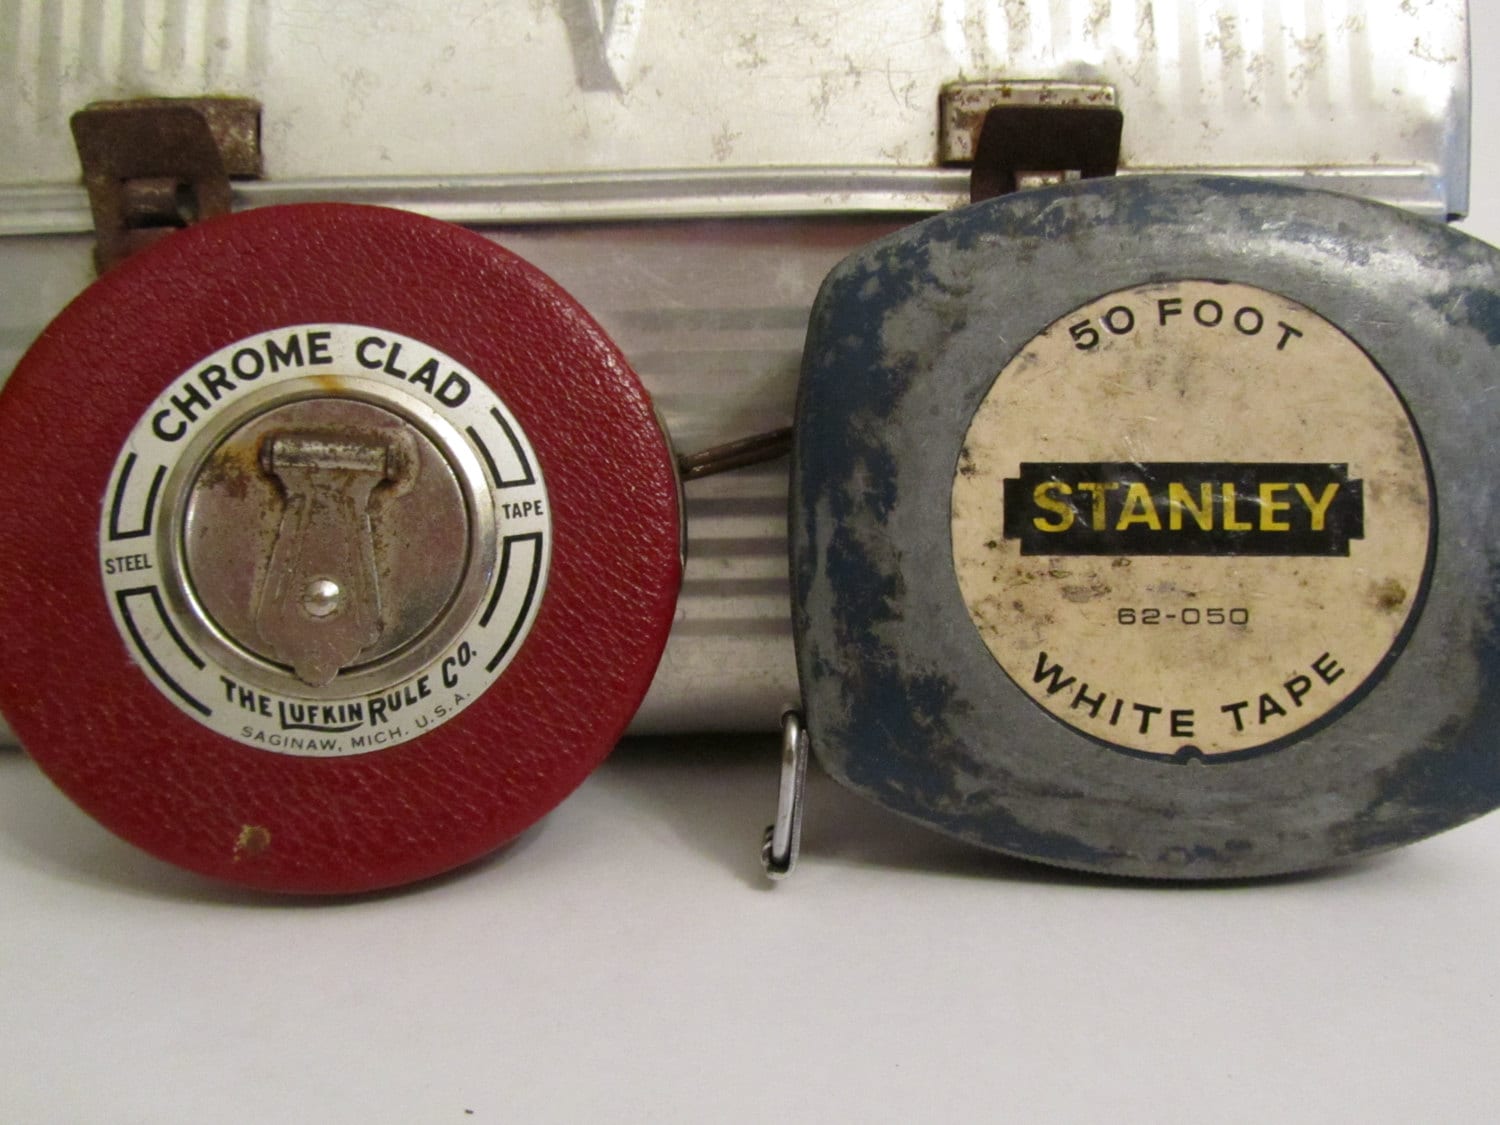 Vintage Lufkin 50ft Metallic Woven Tape Measure Made in USA